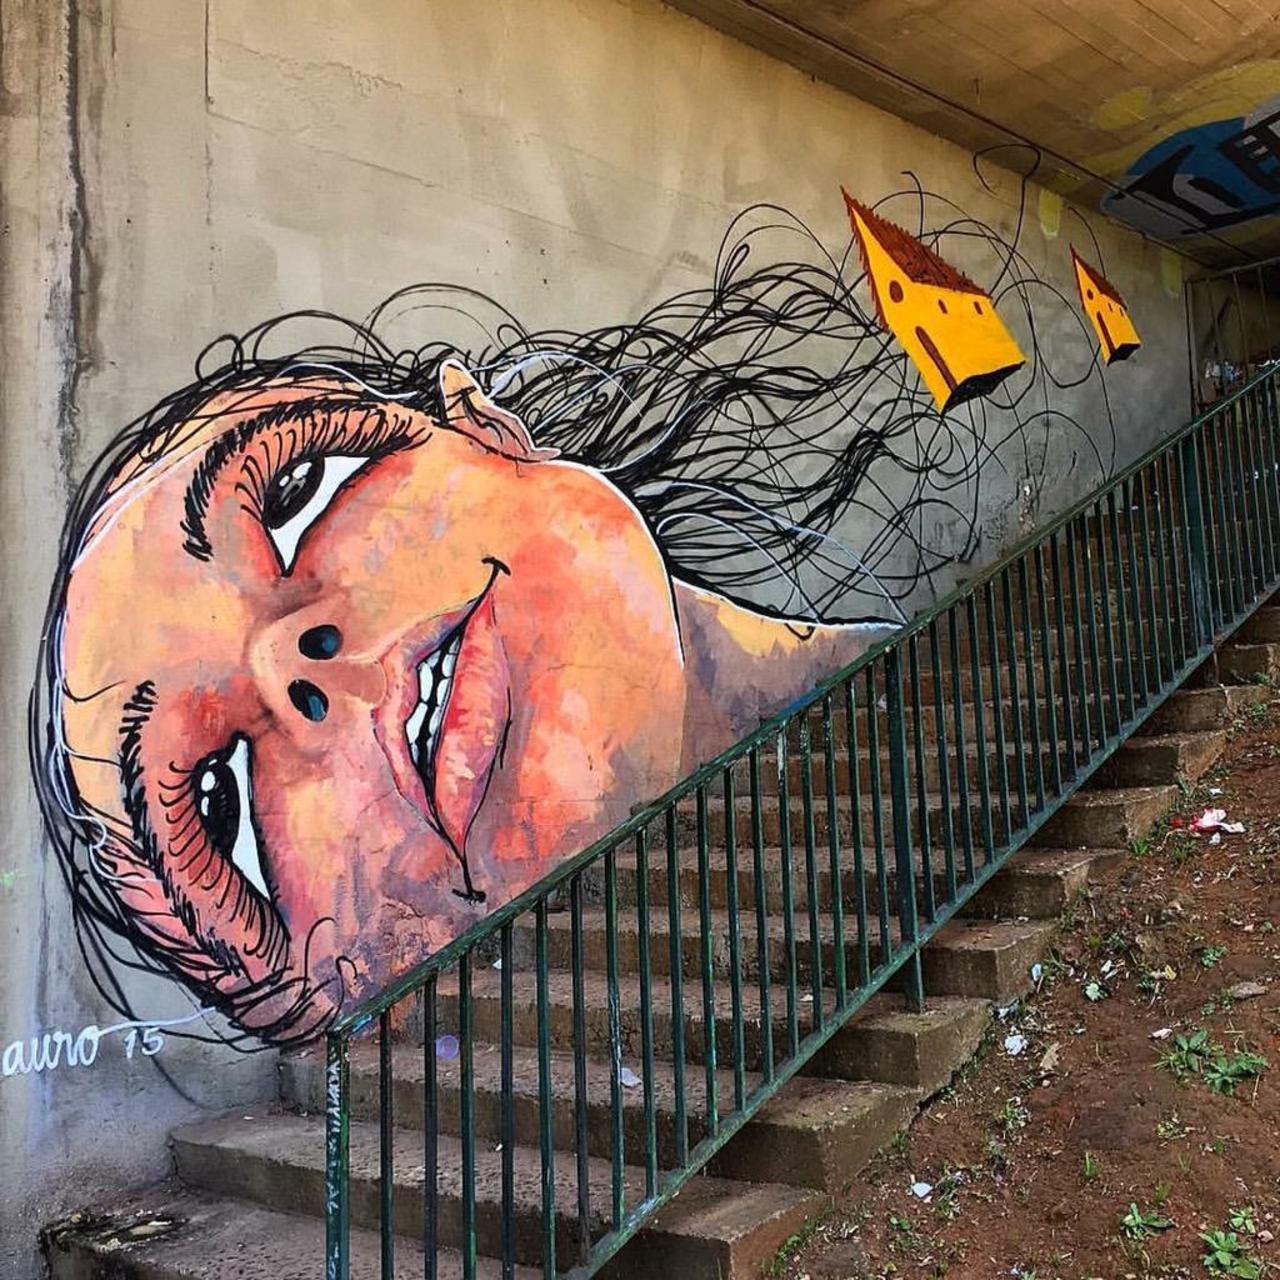 Street Art by Reveracidade in São Paulo 

#art #graffiti #mural #streetart http://t.co/QMJbjBLSqA